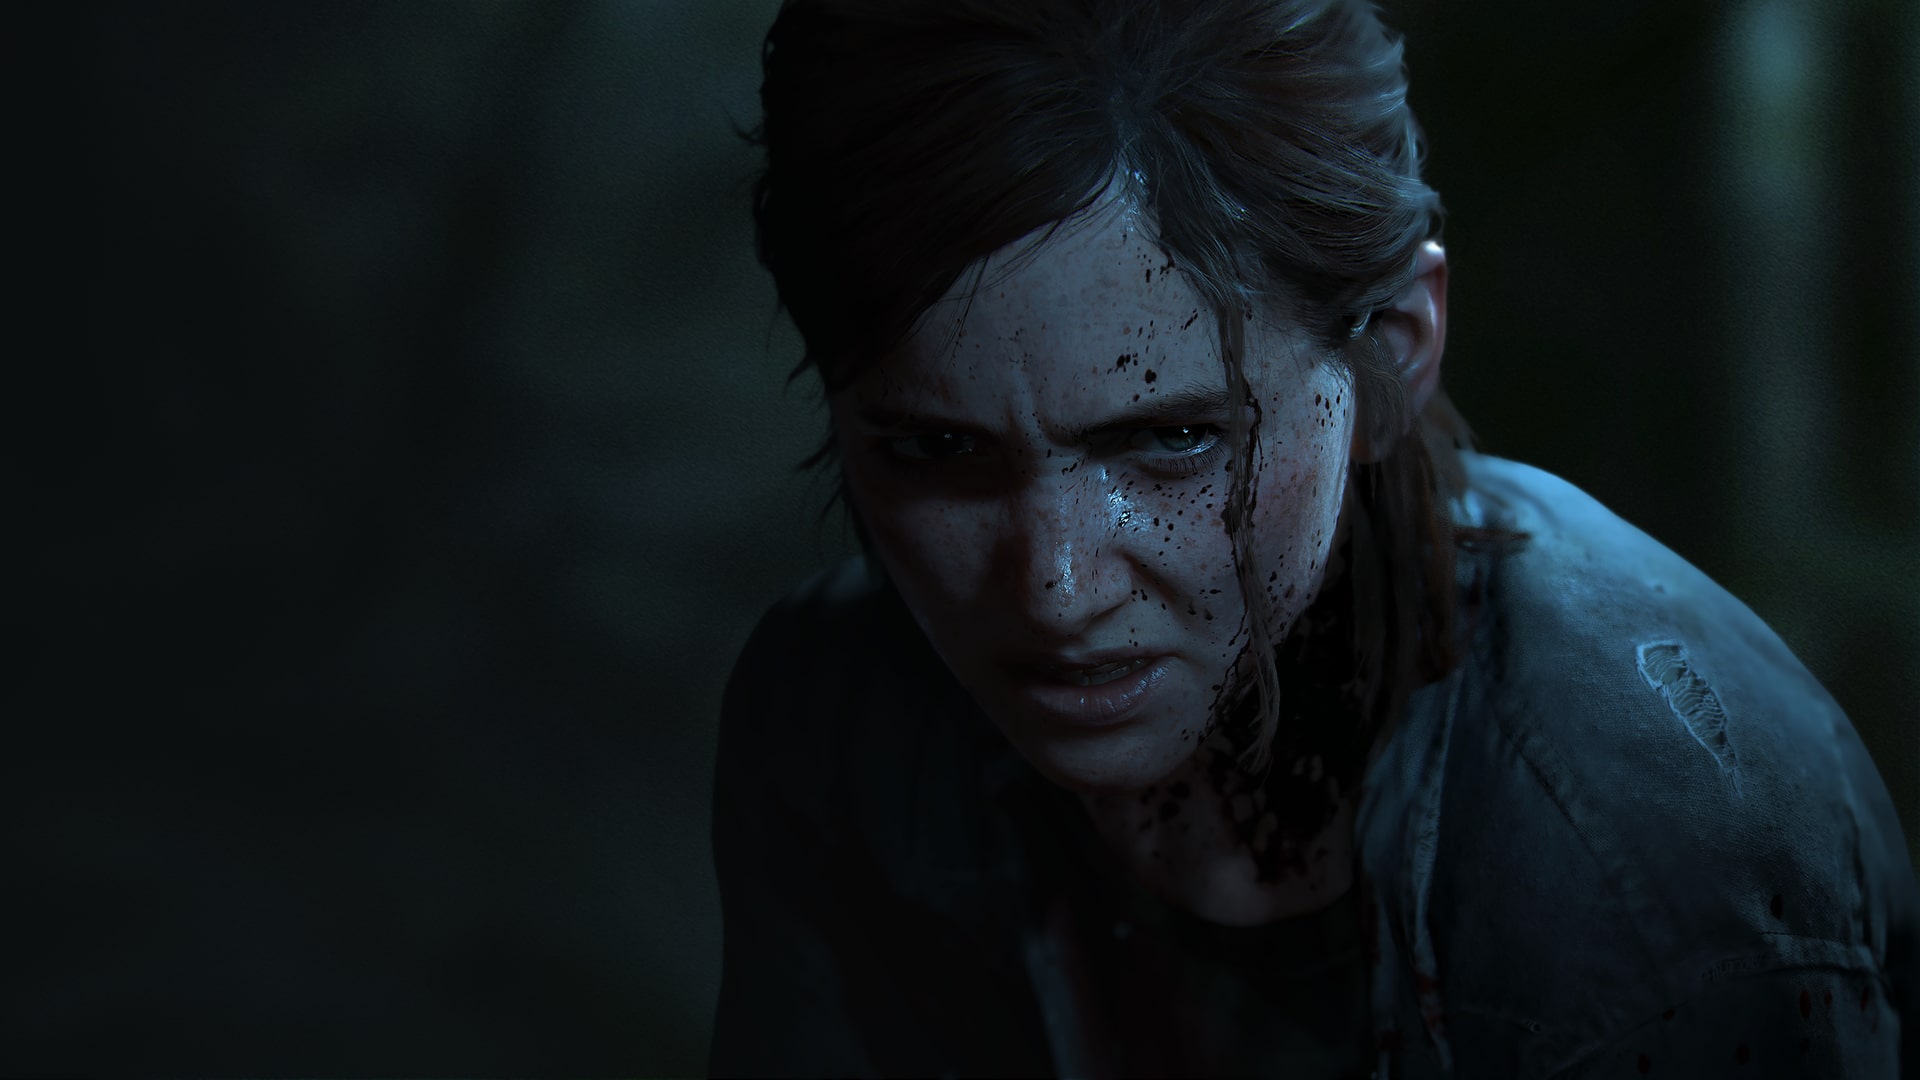 HD wallpaper: Ellie, PlayStation 4, The Last of Us 2, the last of us part II